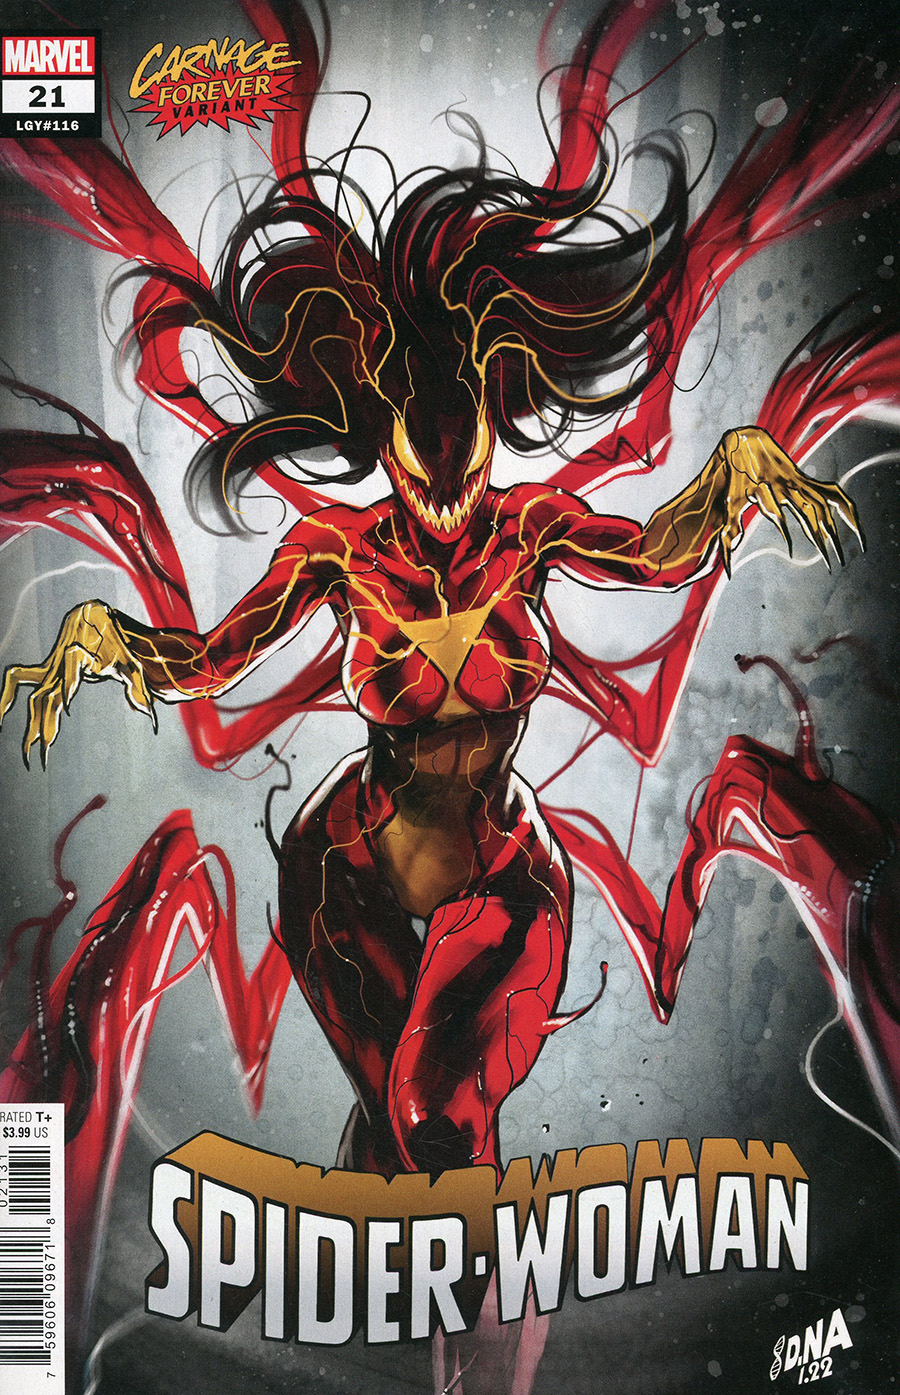 Spider-Woman Vol 7 #21 Cover B Variant David Nakayama Carnage Forever Cover